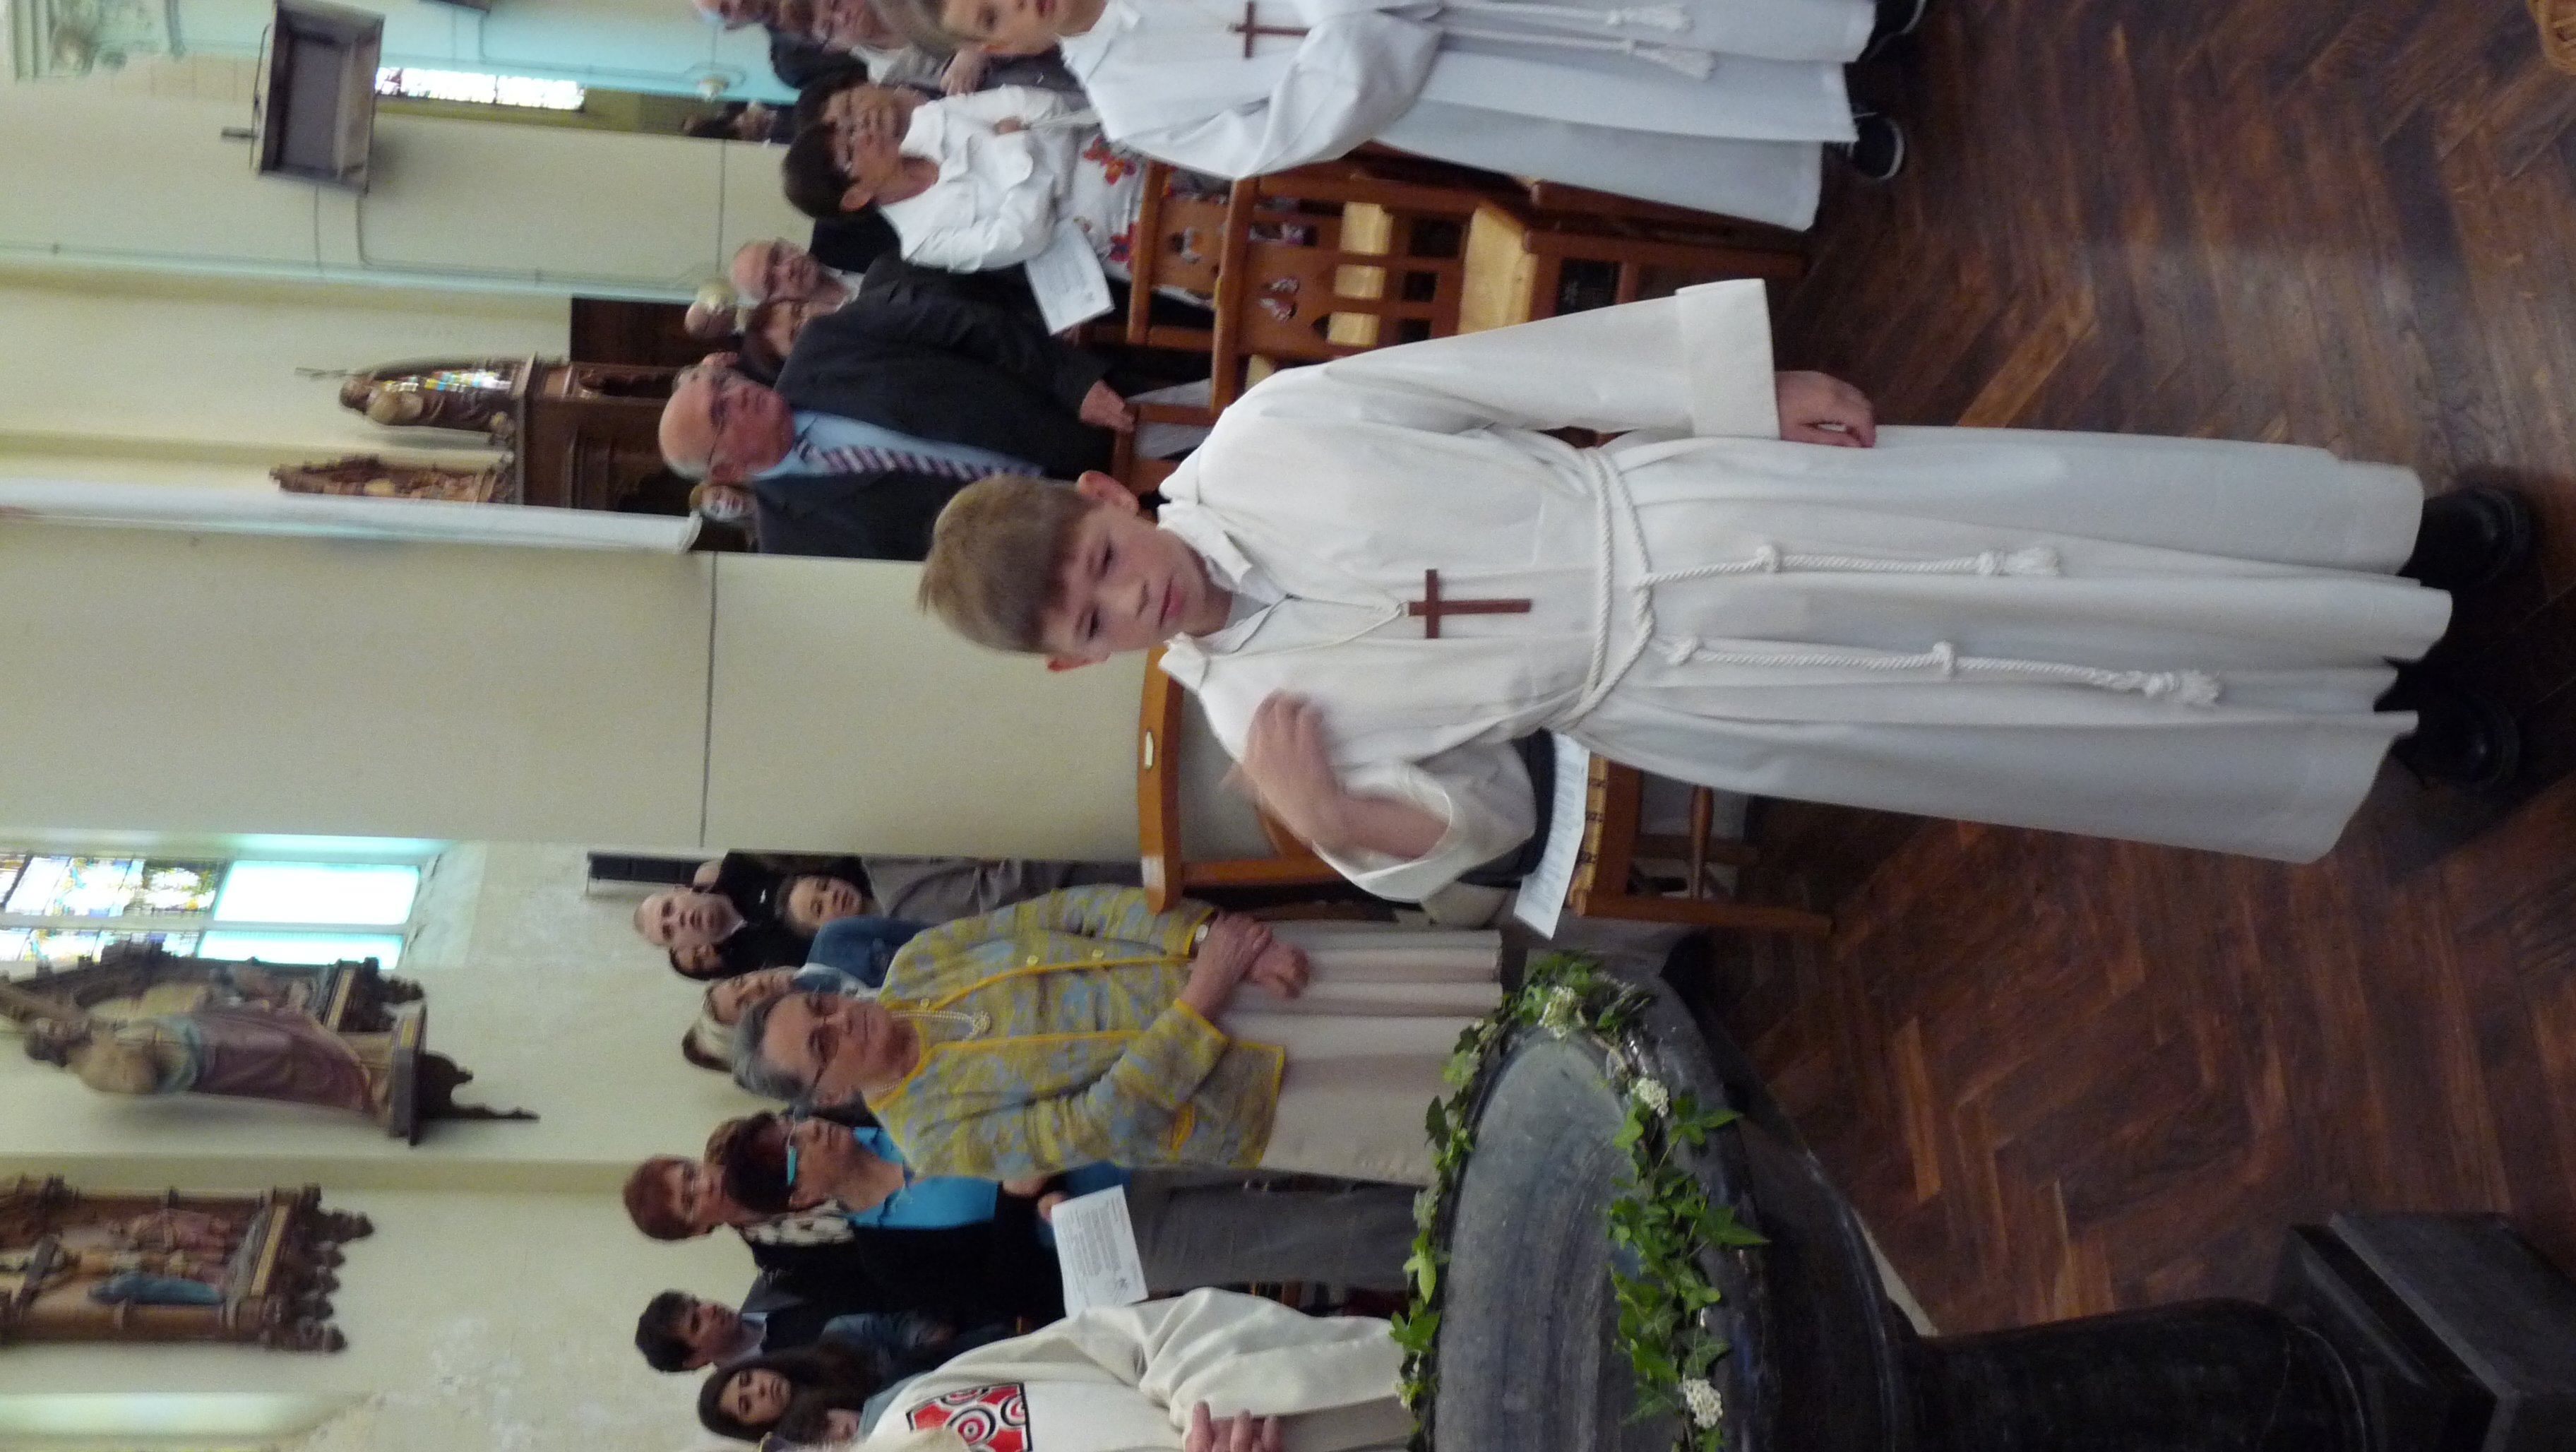 communion solennelle villers guislain 2 juin 2013